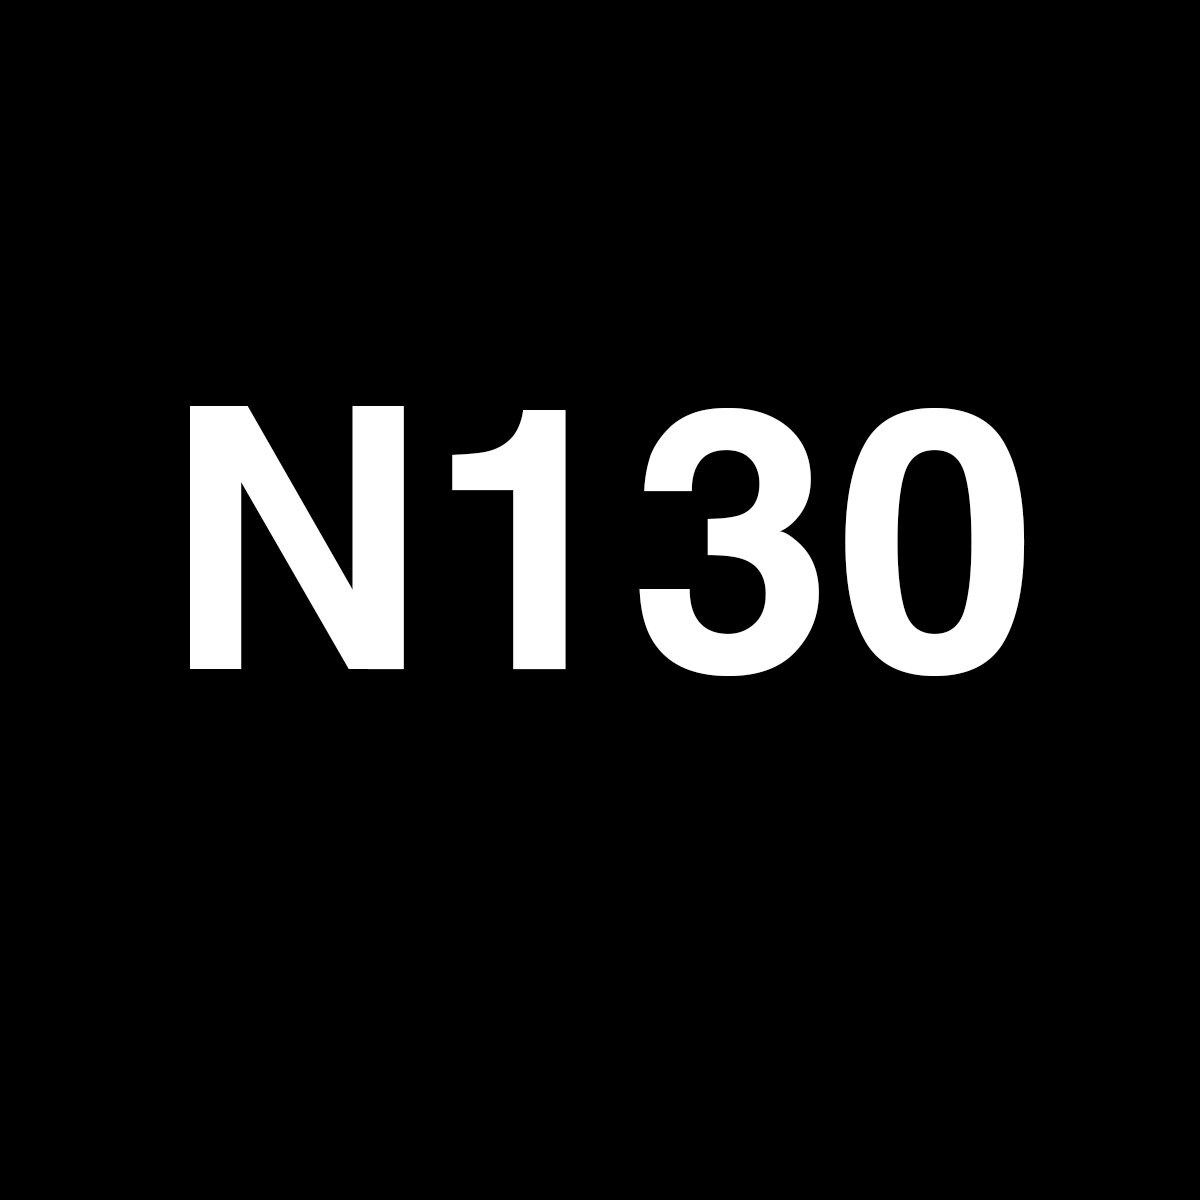 NORTH130 Films